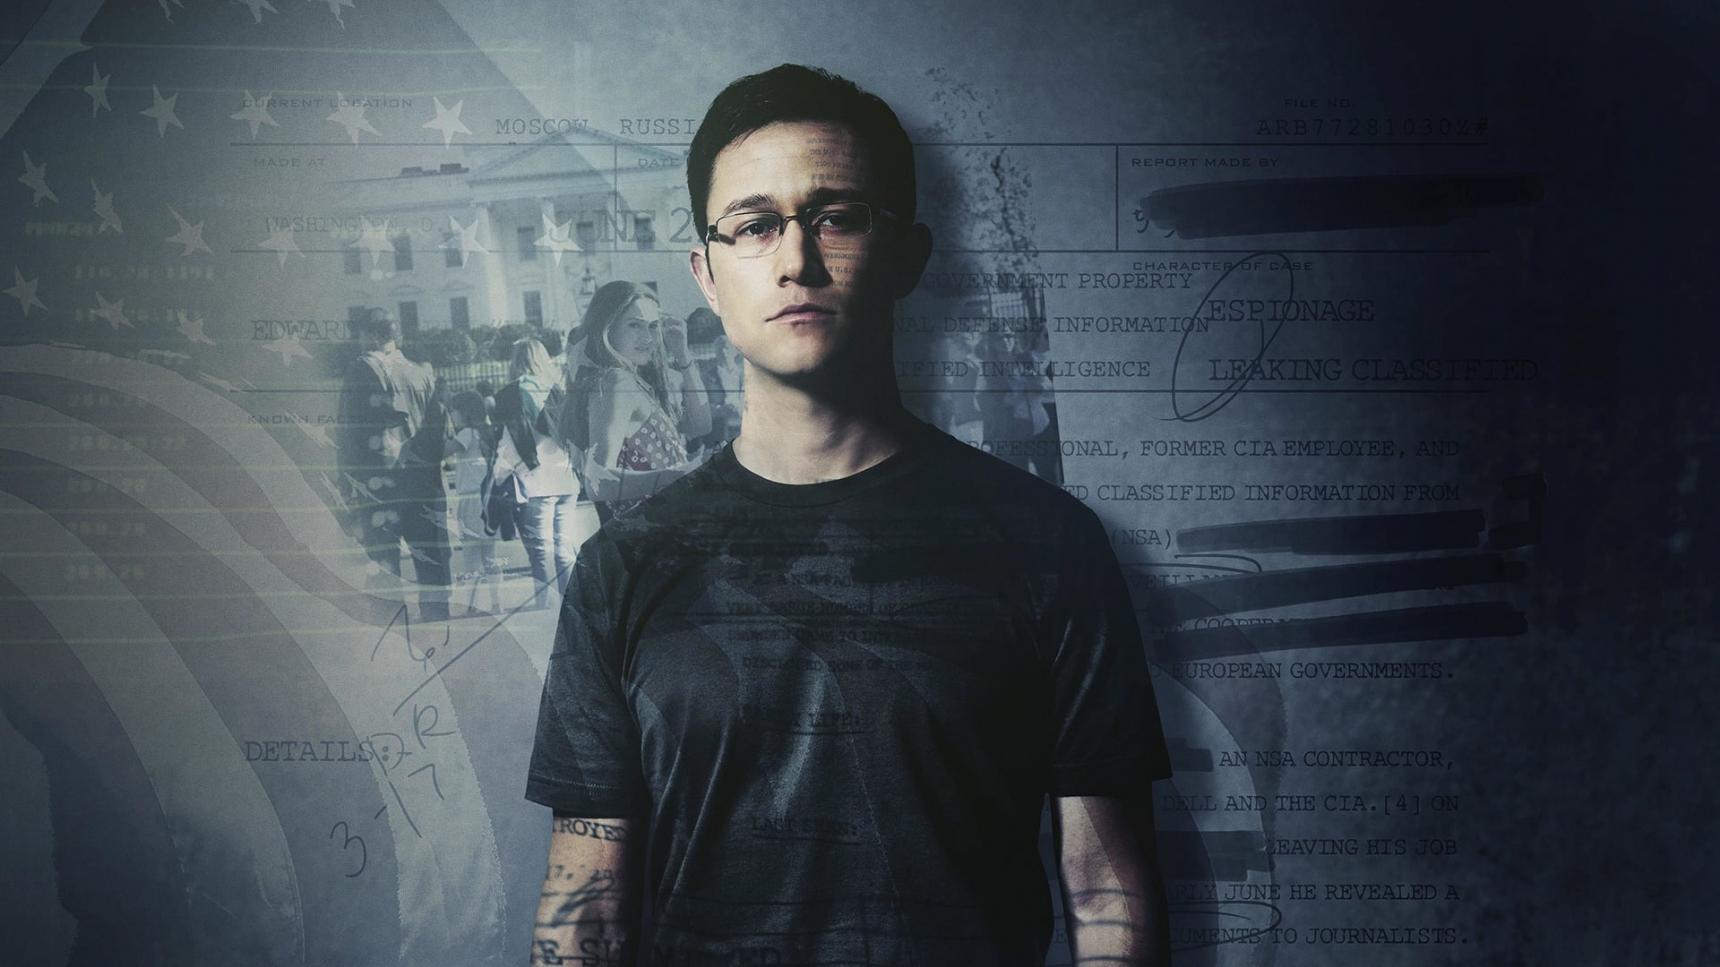 Fondo de pantalla de la película Edward Snowden en Cliver.tv gratis